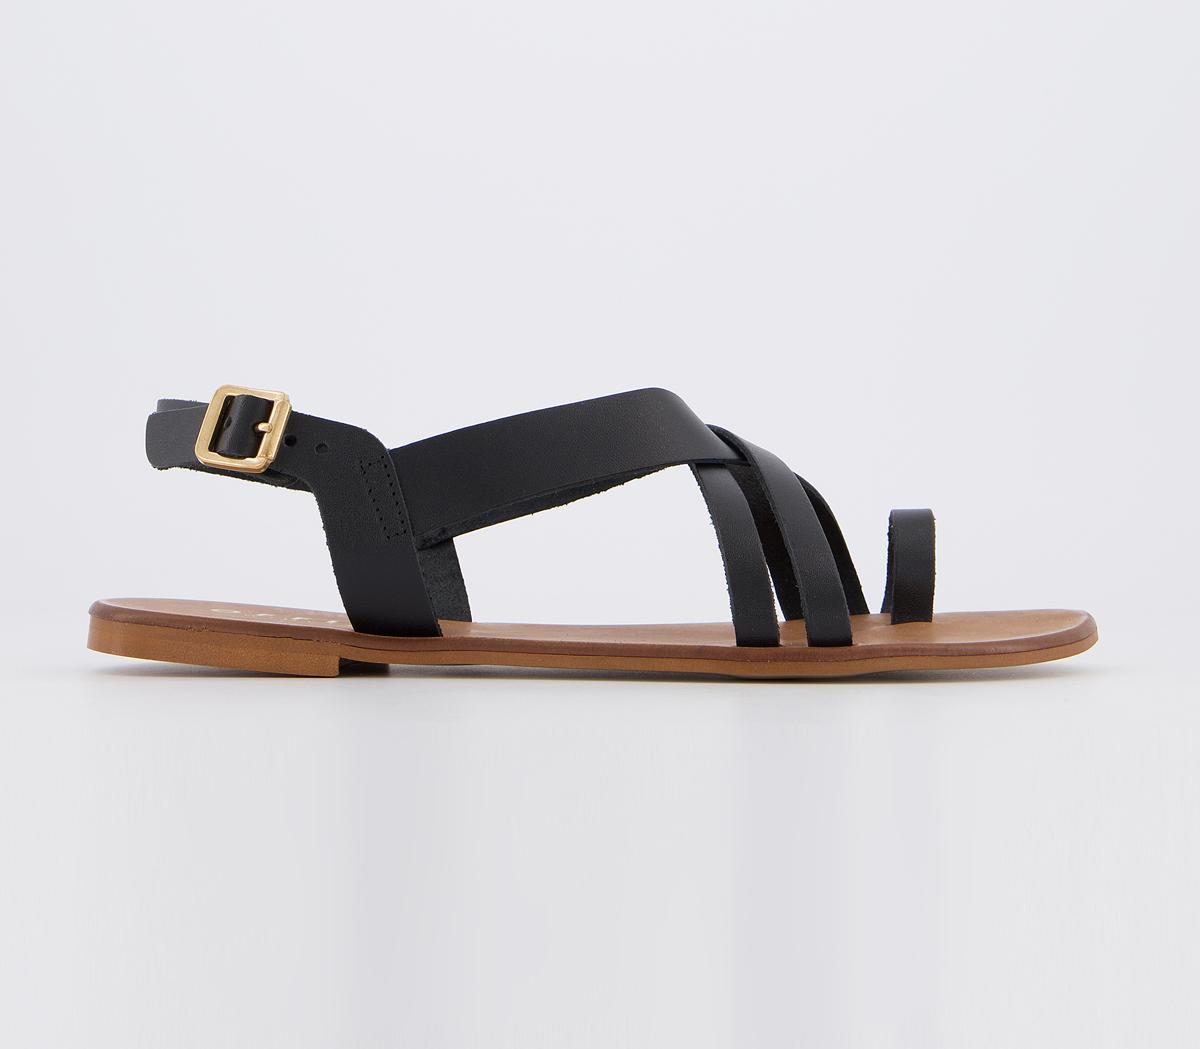 OFFICE Serious Tan Toe Loop Sandals Black Leather - Women’s Sandals